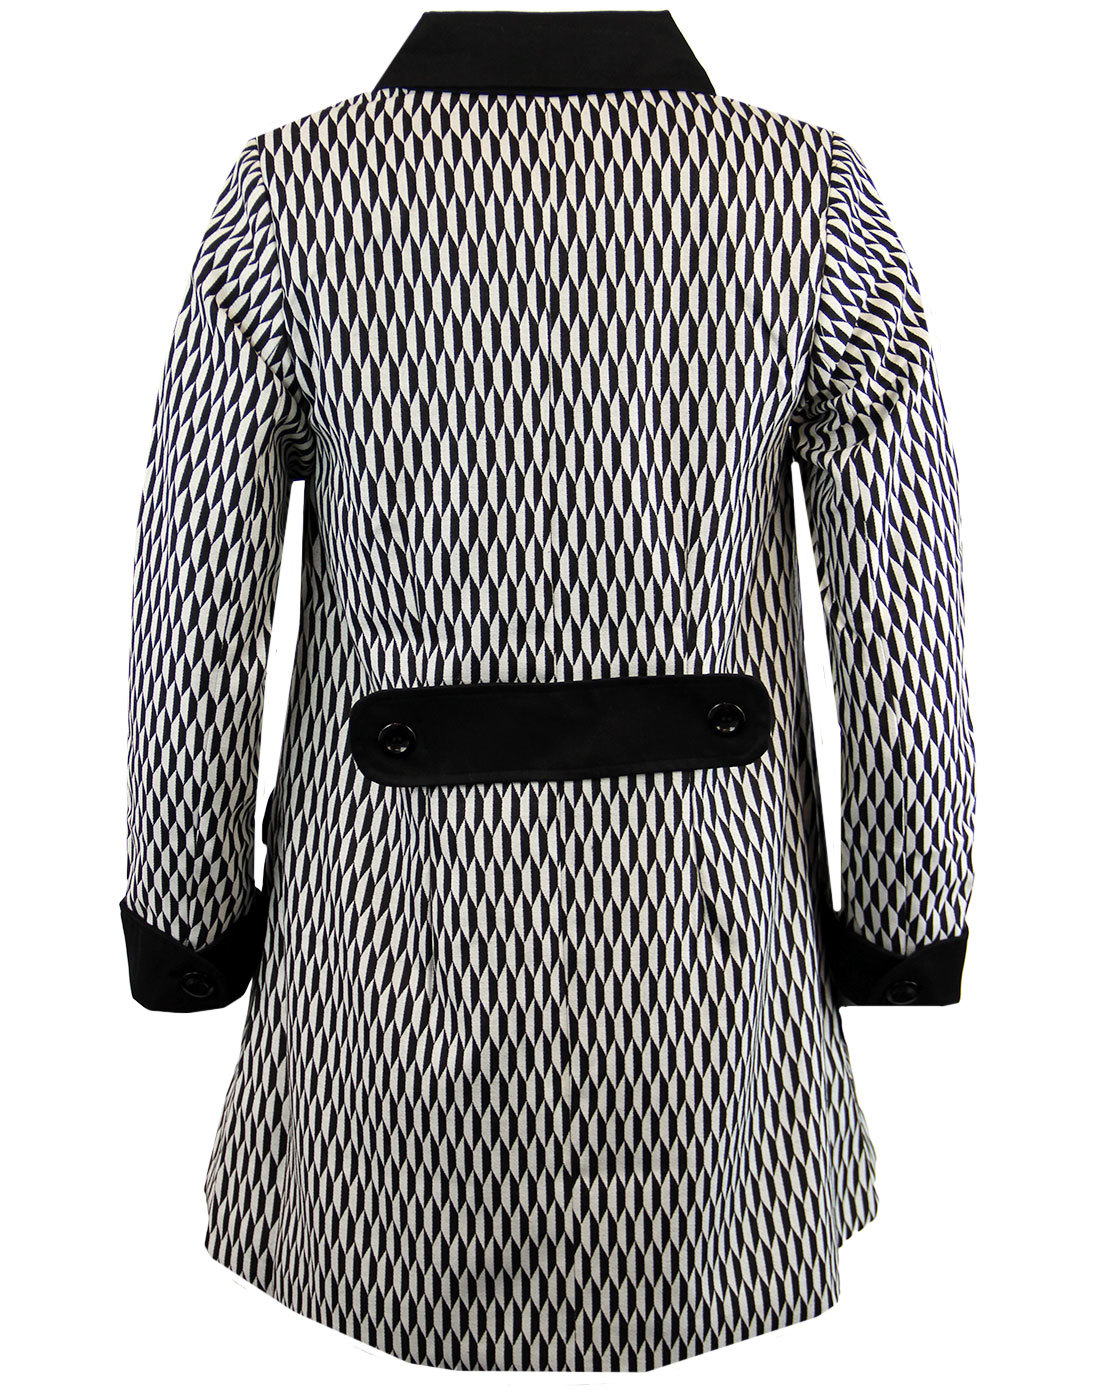 MADCAP ENGLAND Karina Retro 60s Mod Op Art A-Line Coat in Black